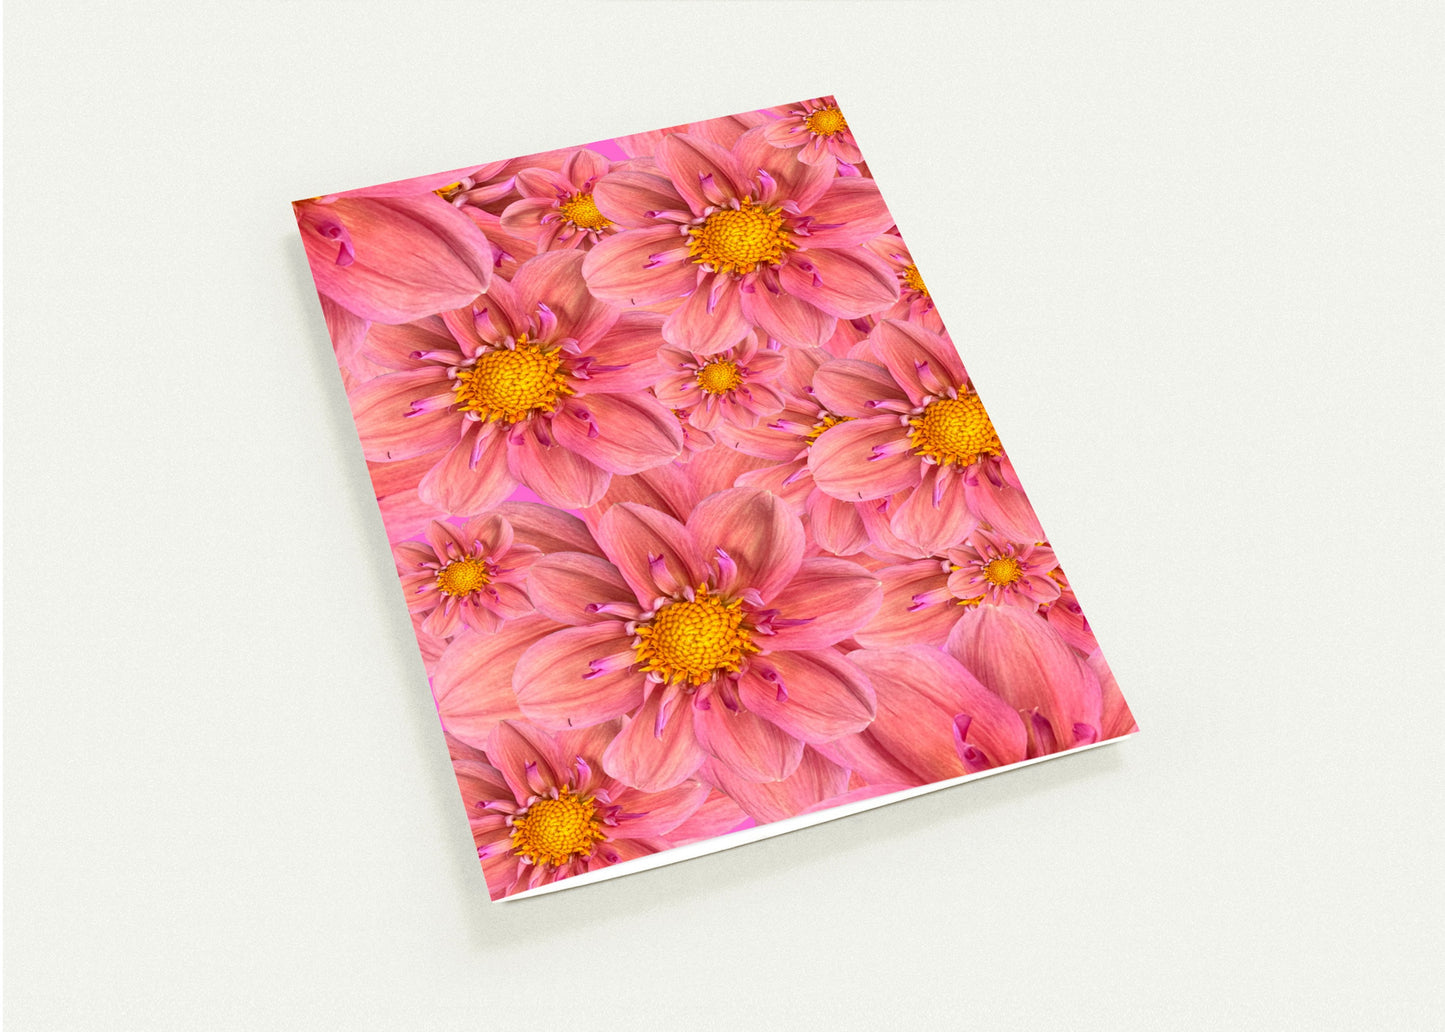 Pink Dahlias Greeting Card - Hugh's Garden for Mary Potter Hospice